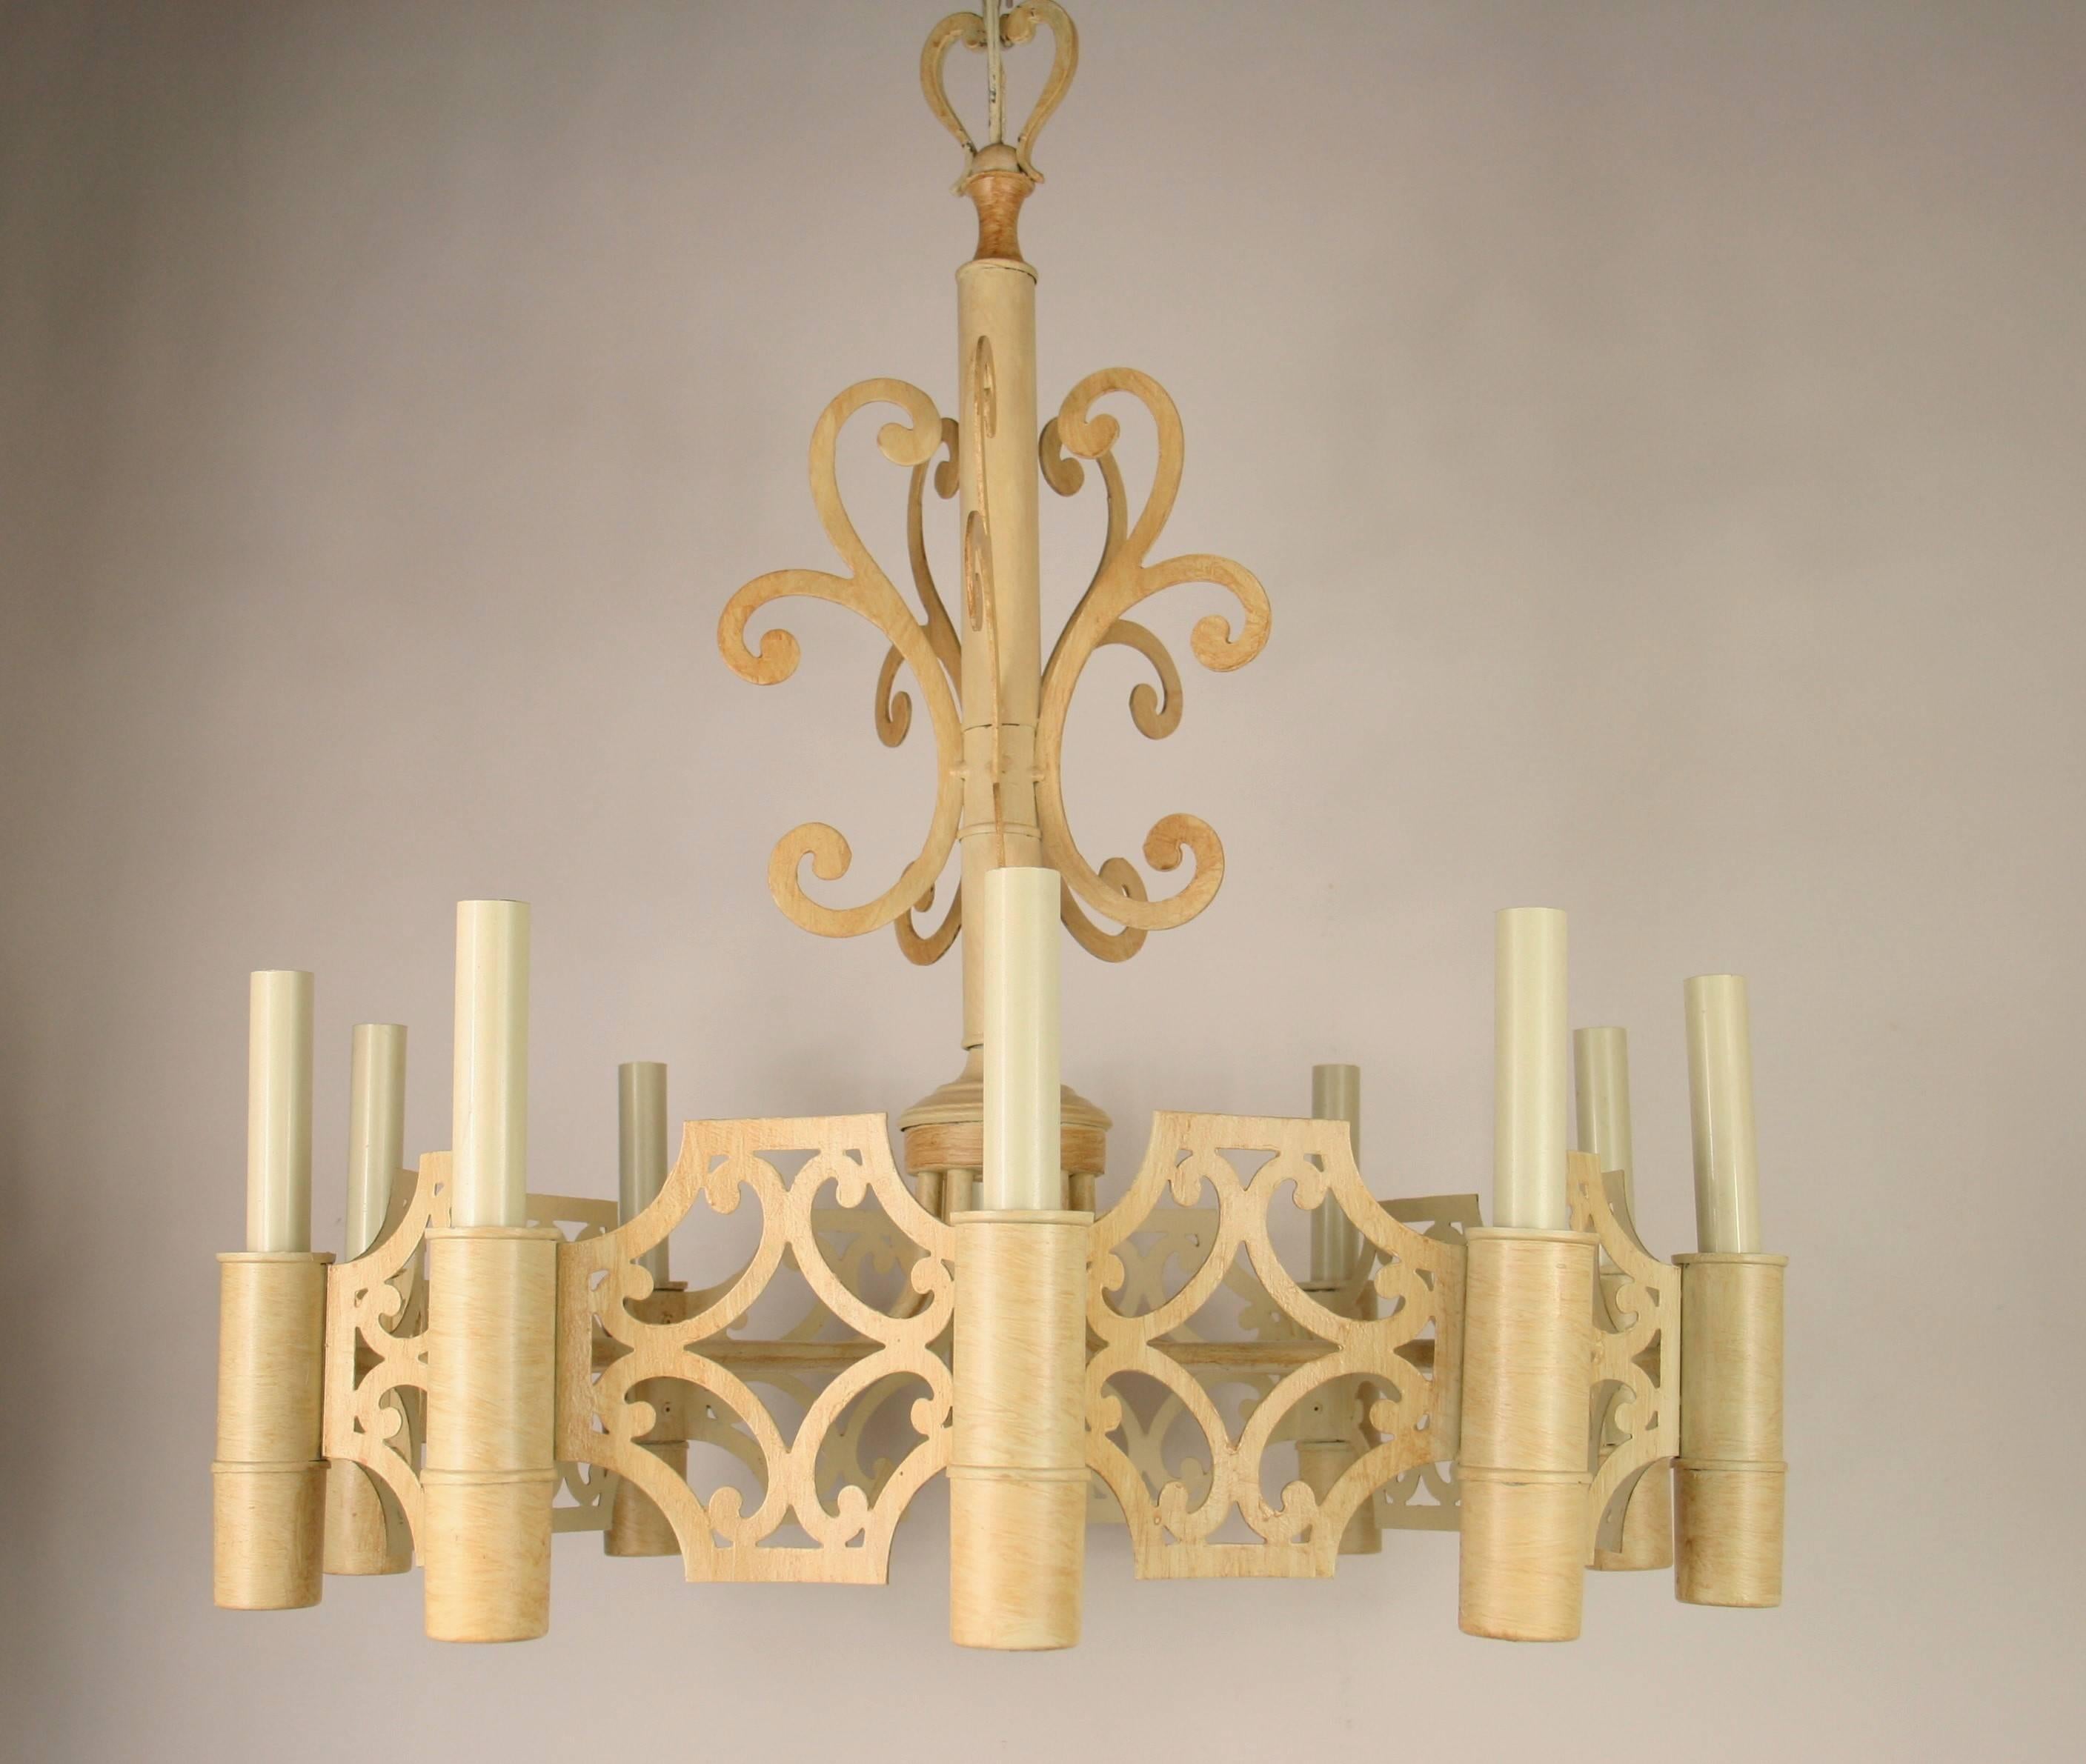 1-4022 hand painted French ten-light chandelier. Take 10 25watt max candelabra based bulbs.